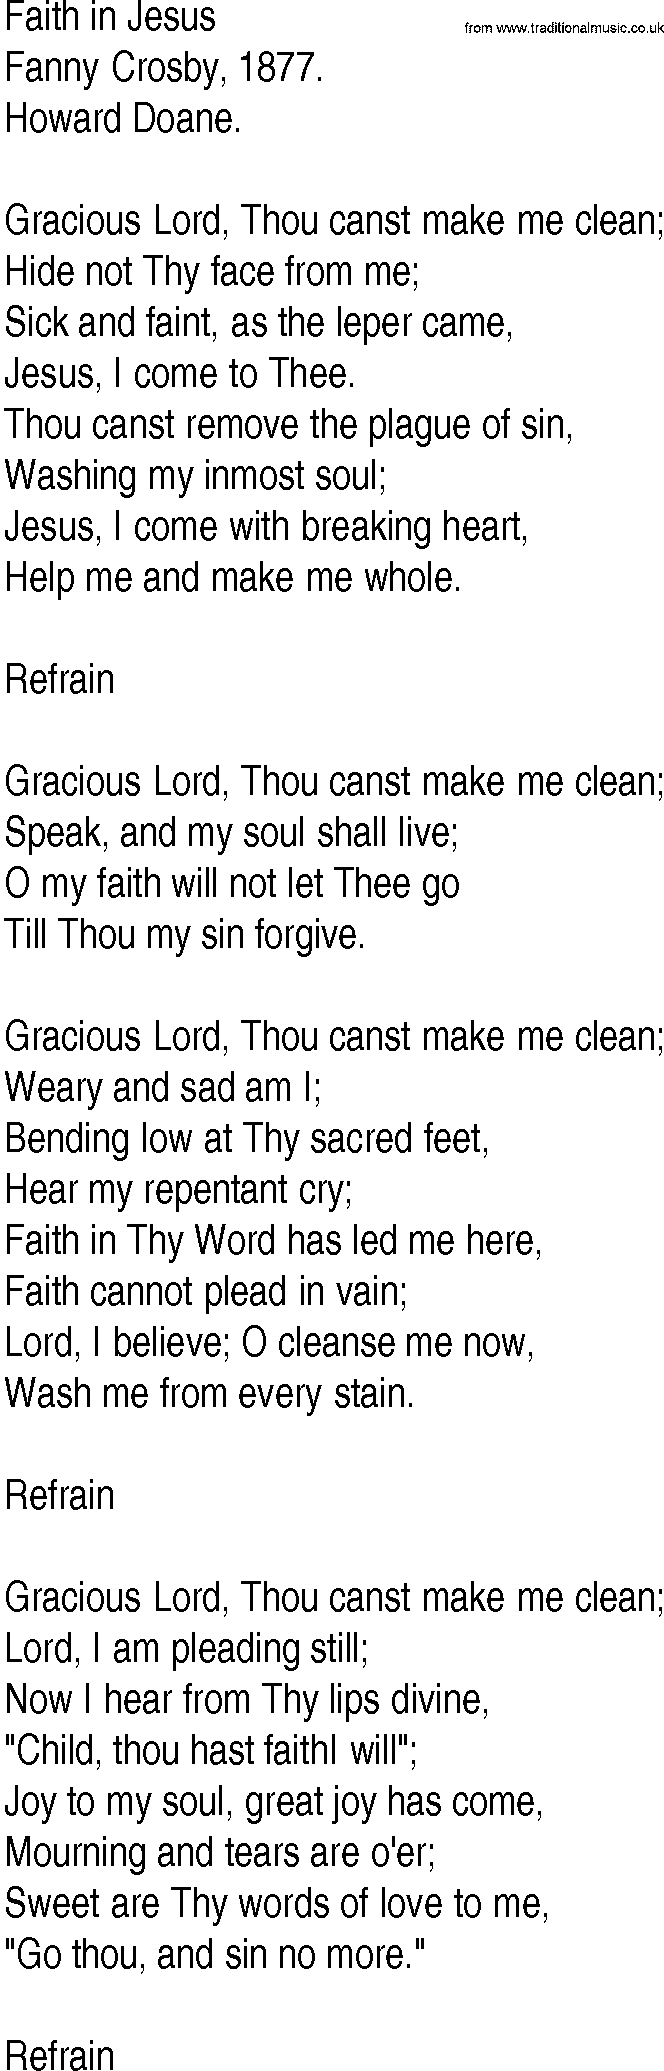 Hymn and Gospel Song: Faith in Jesus by Fanny Crosby lyrics